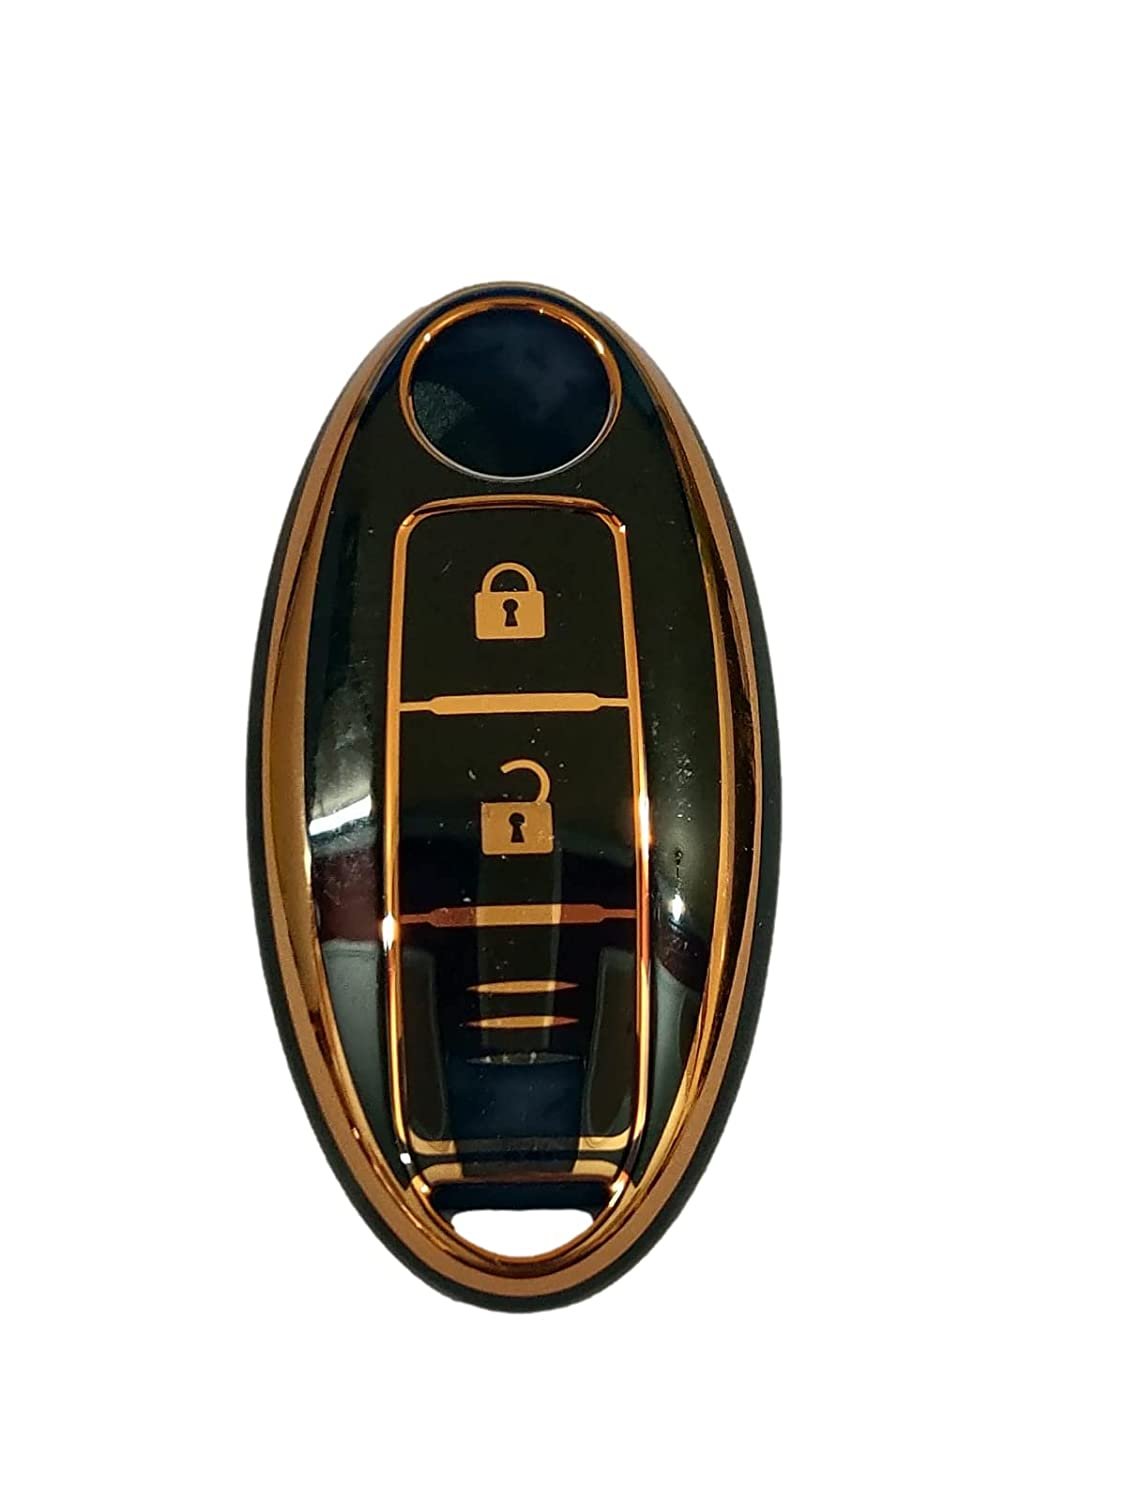 TPU Carbon Fiber Style Car Key Cover Compatible with Nissan Micra, Sunny, Teana, Magnite 3 Button Smart Key(Golden/Black) Image